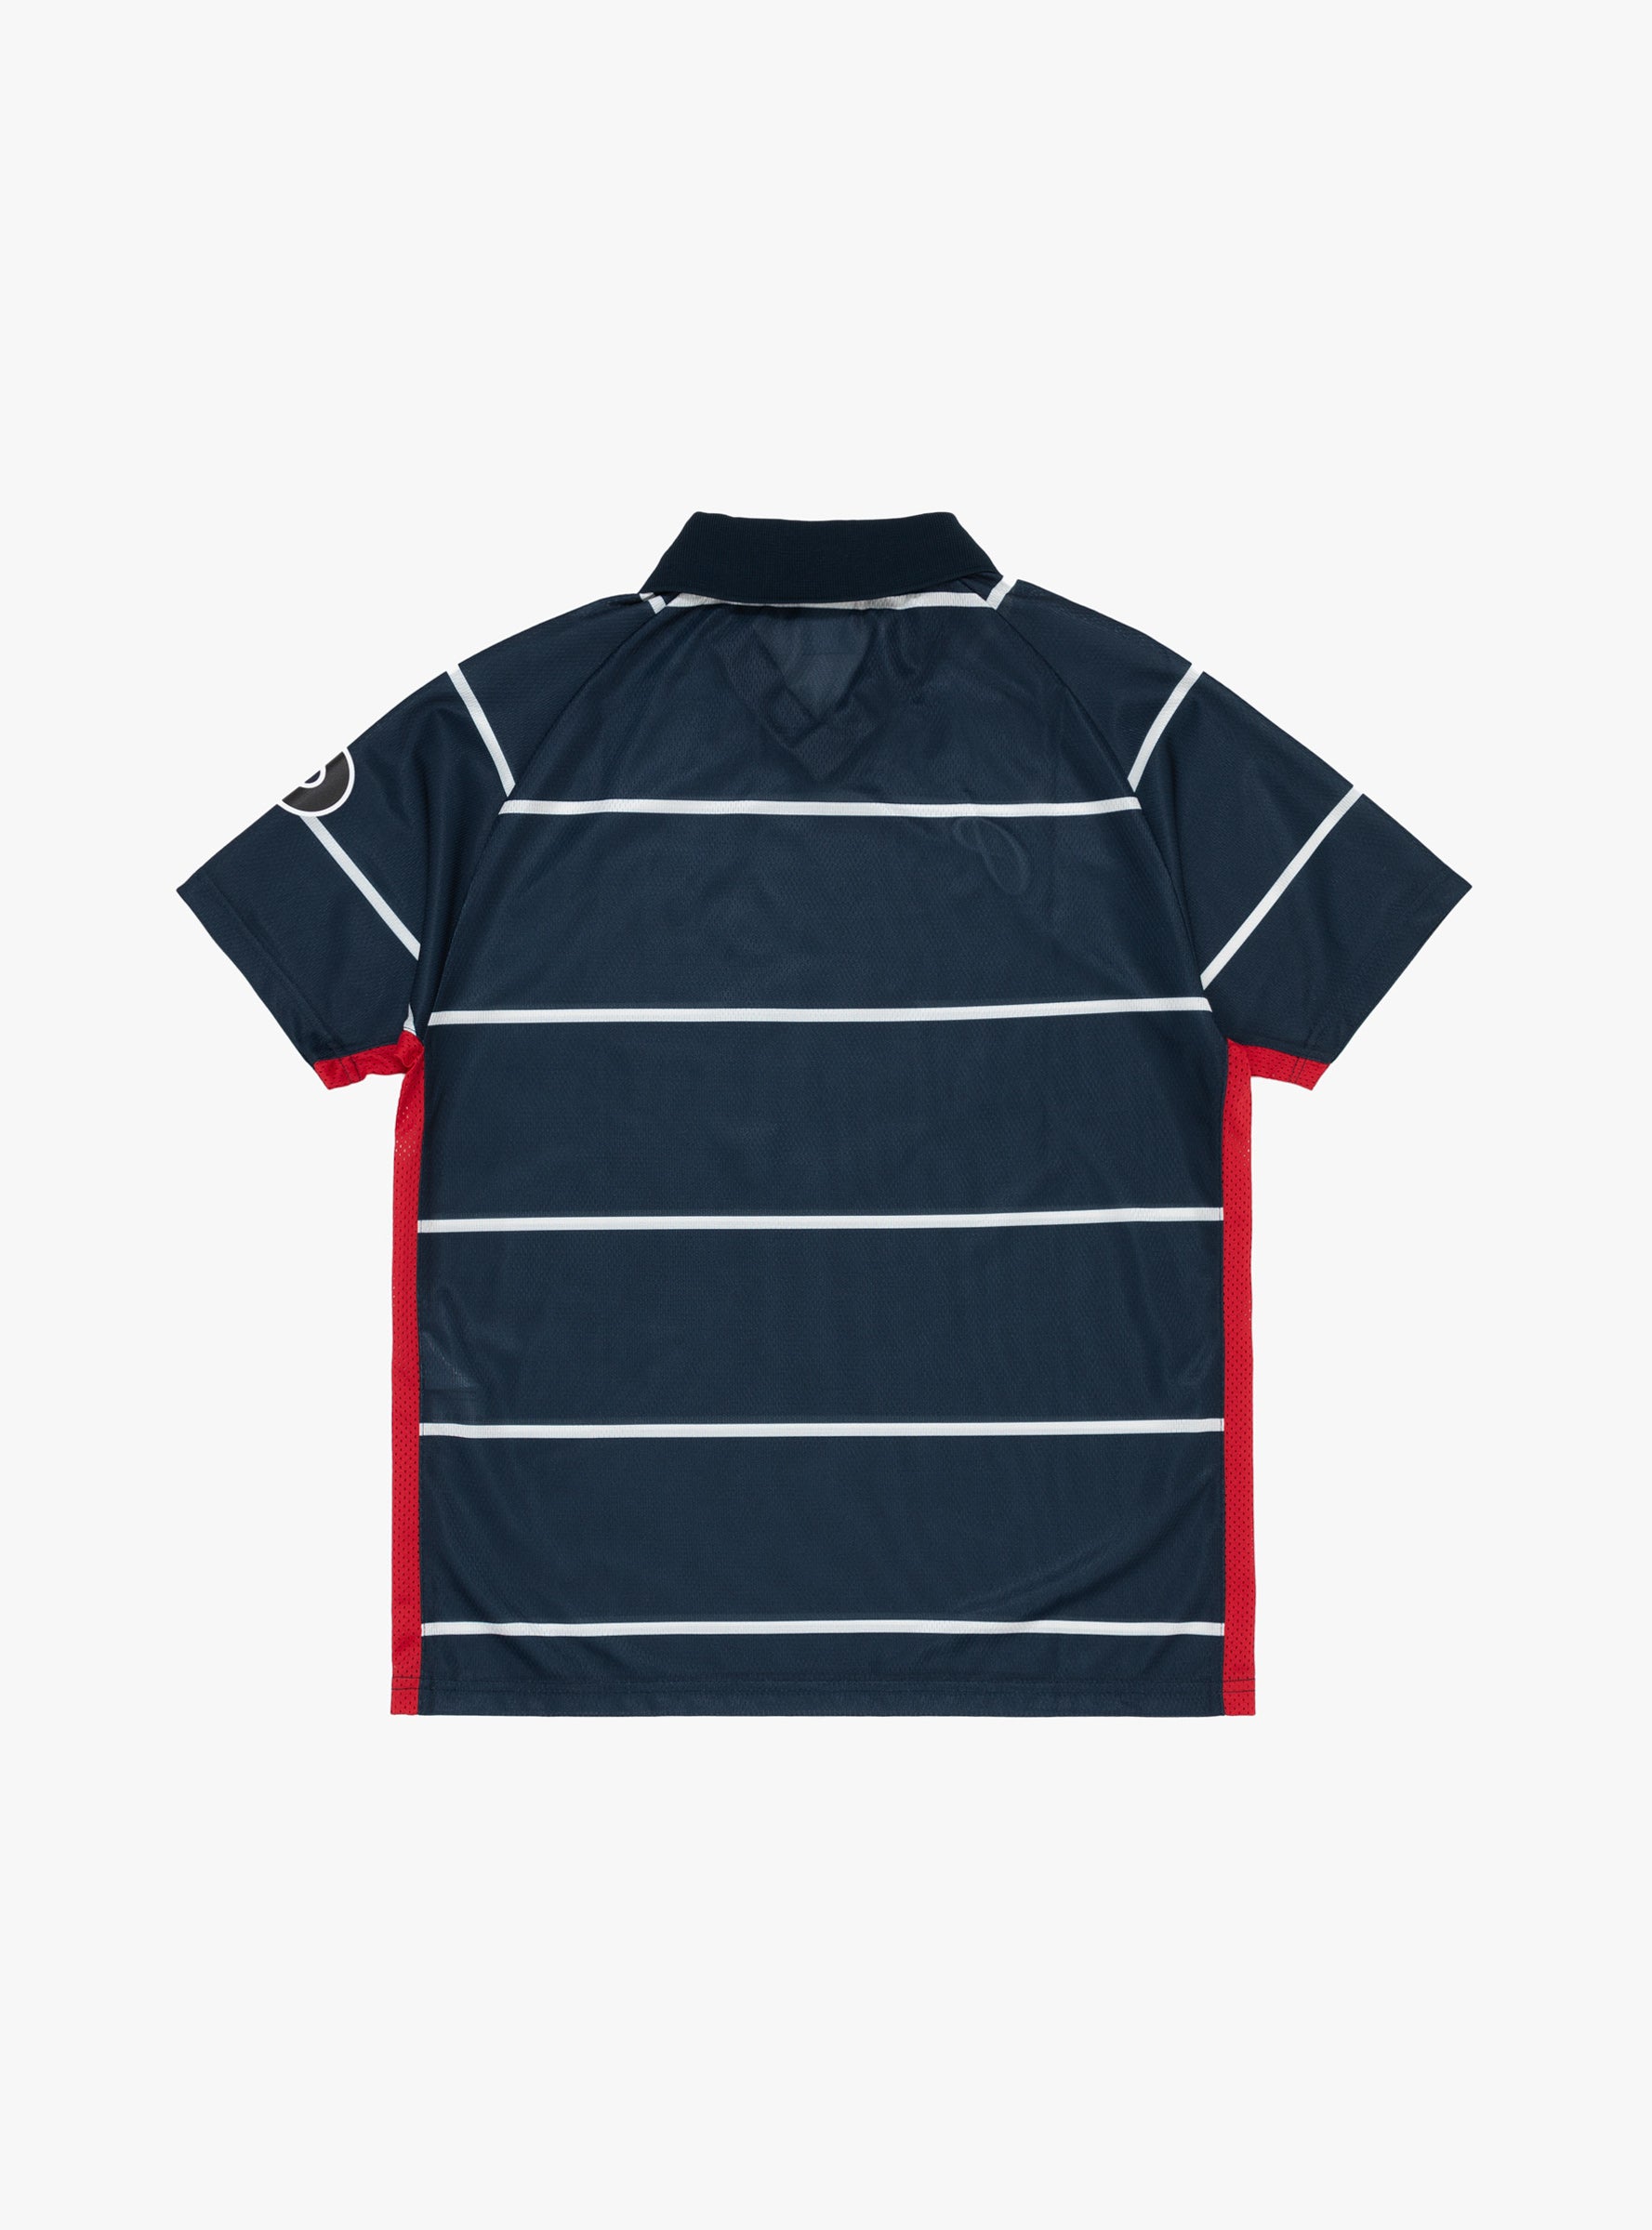 Pop Trading Company Pop Trading Company Striped Sportif T-Shirt Navy - Size: Medium